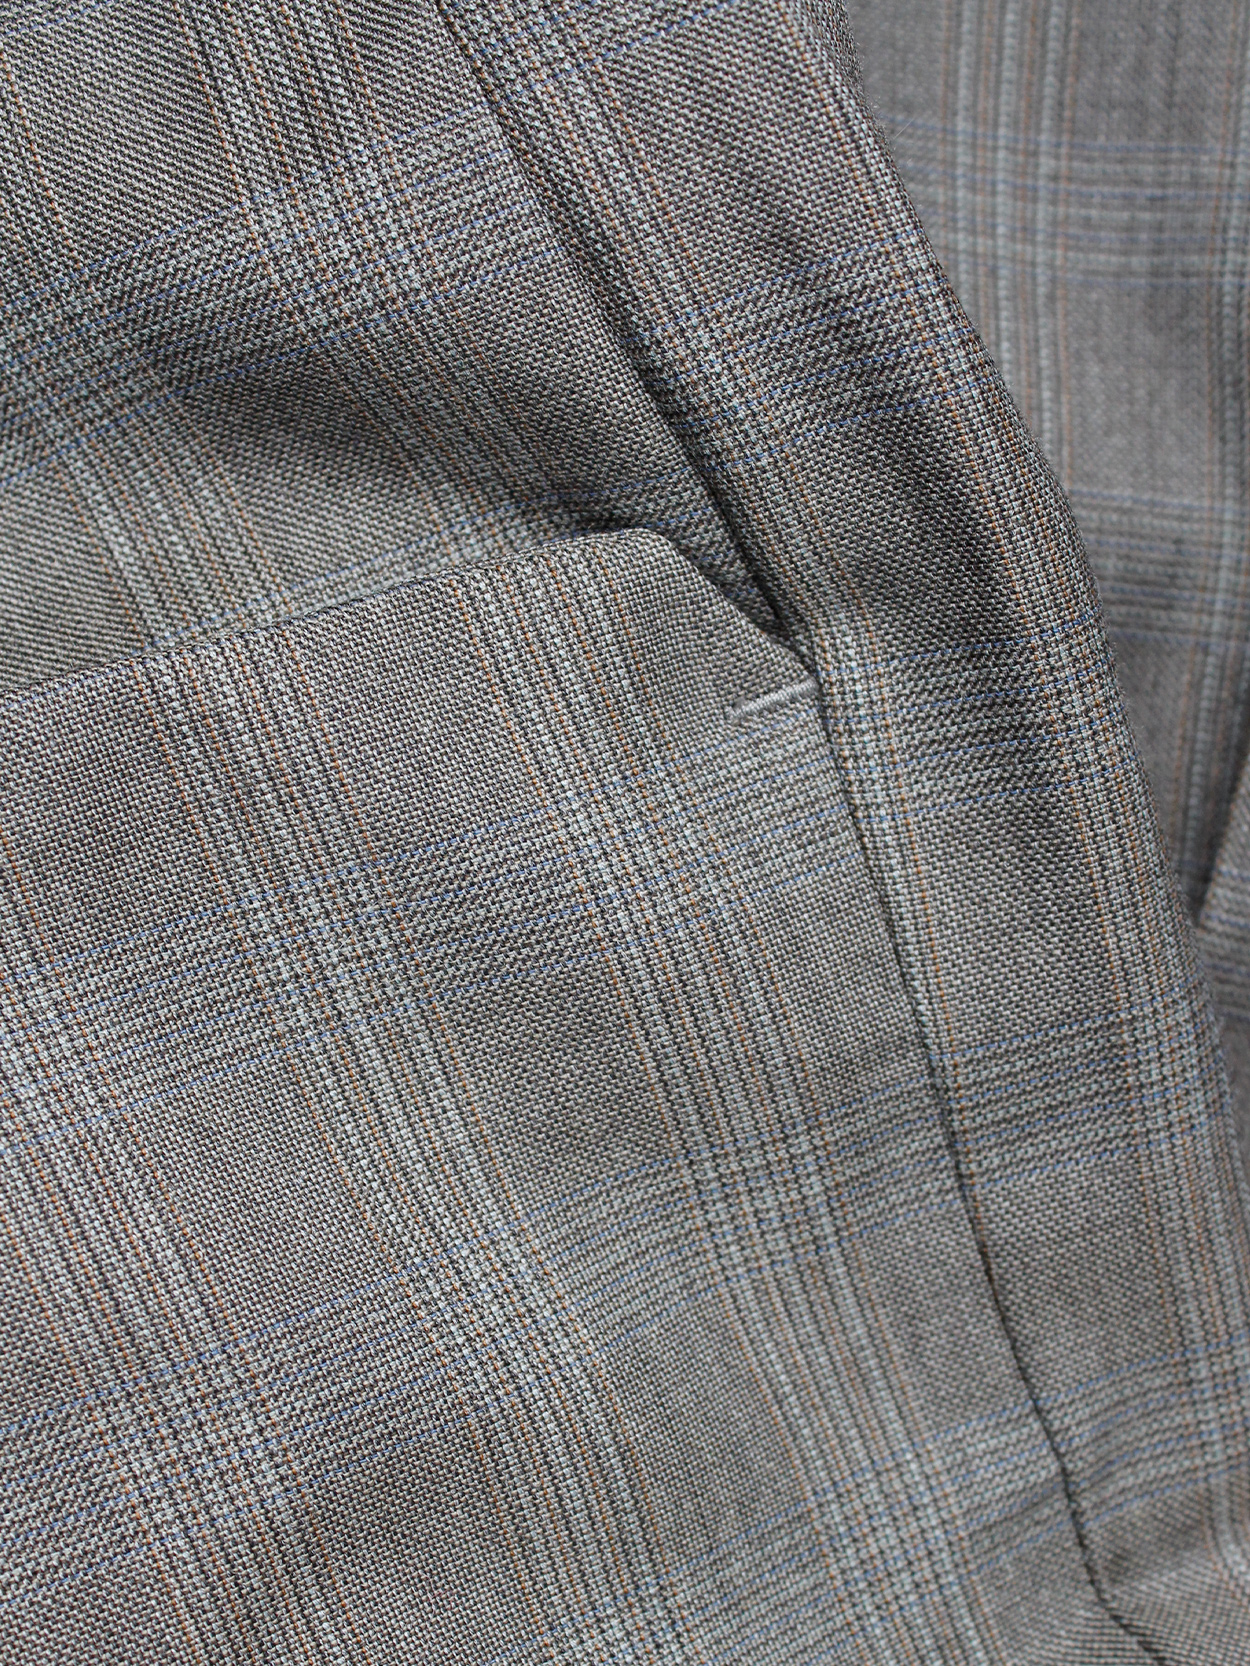 Maison Martin Margiela brown tartan trousers with side belt detail ...